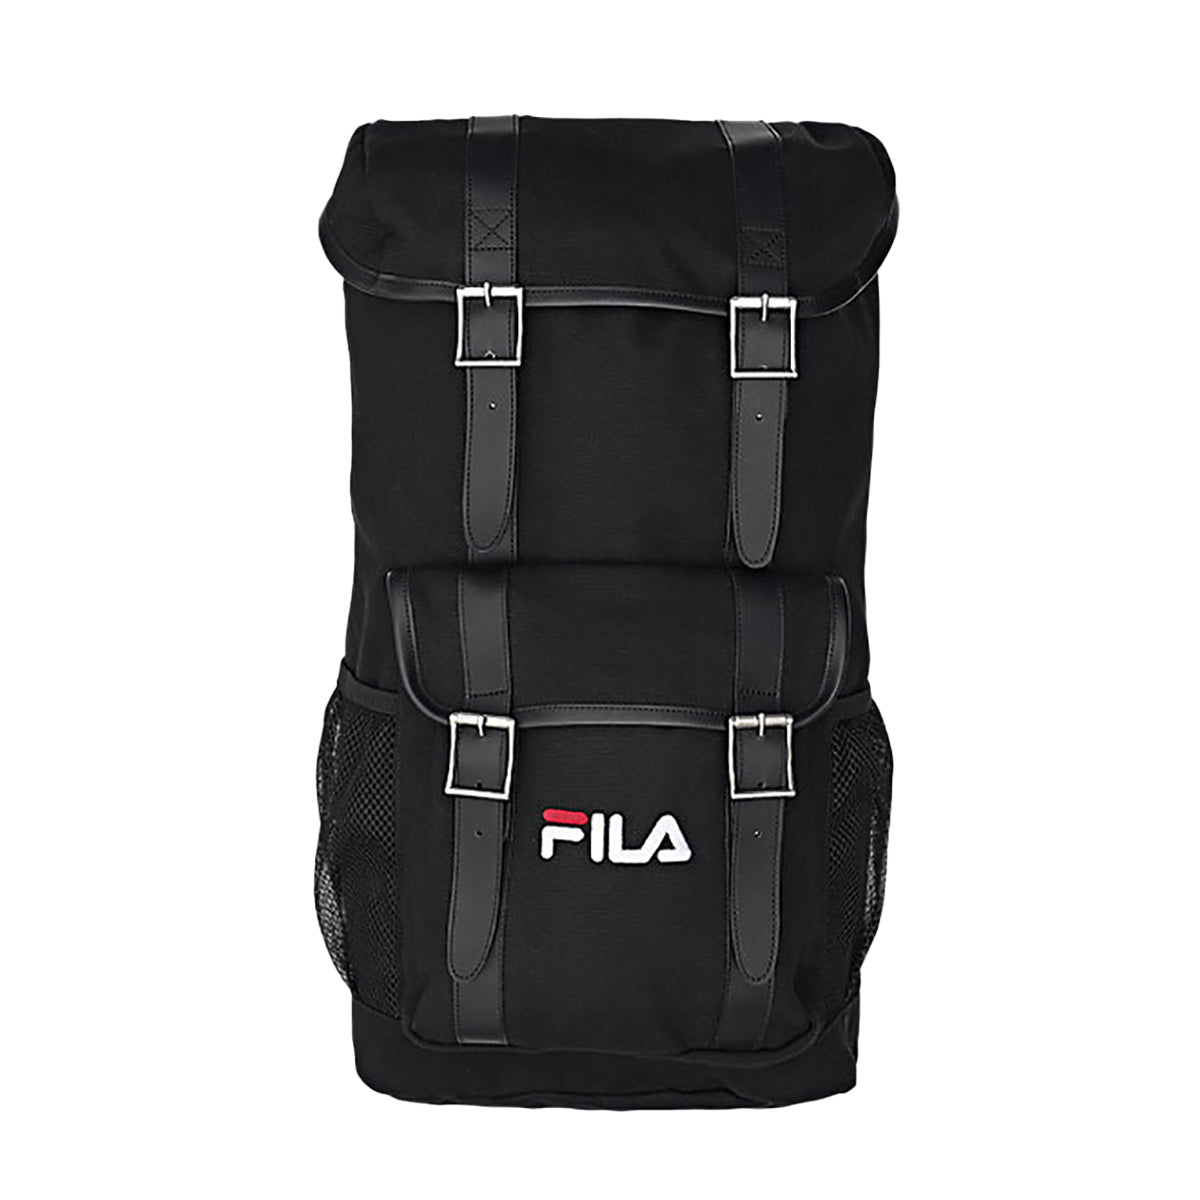 FILA bag cross body shoulder purse sling mini color block Black/White/Red |  eBay